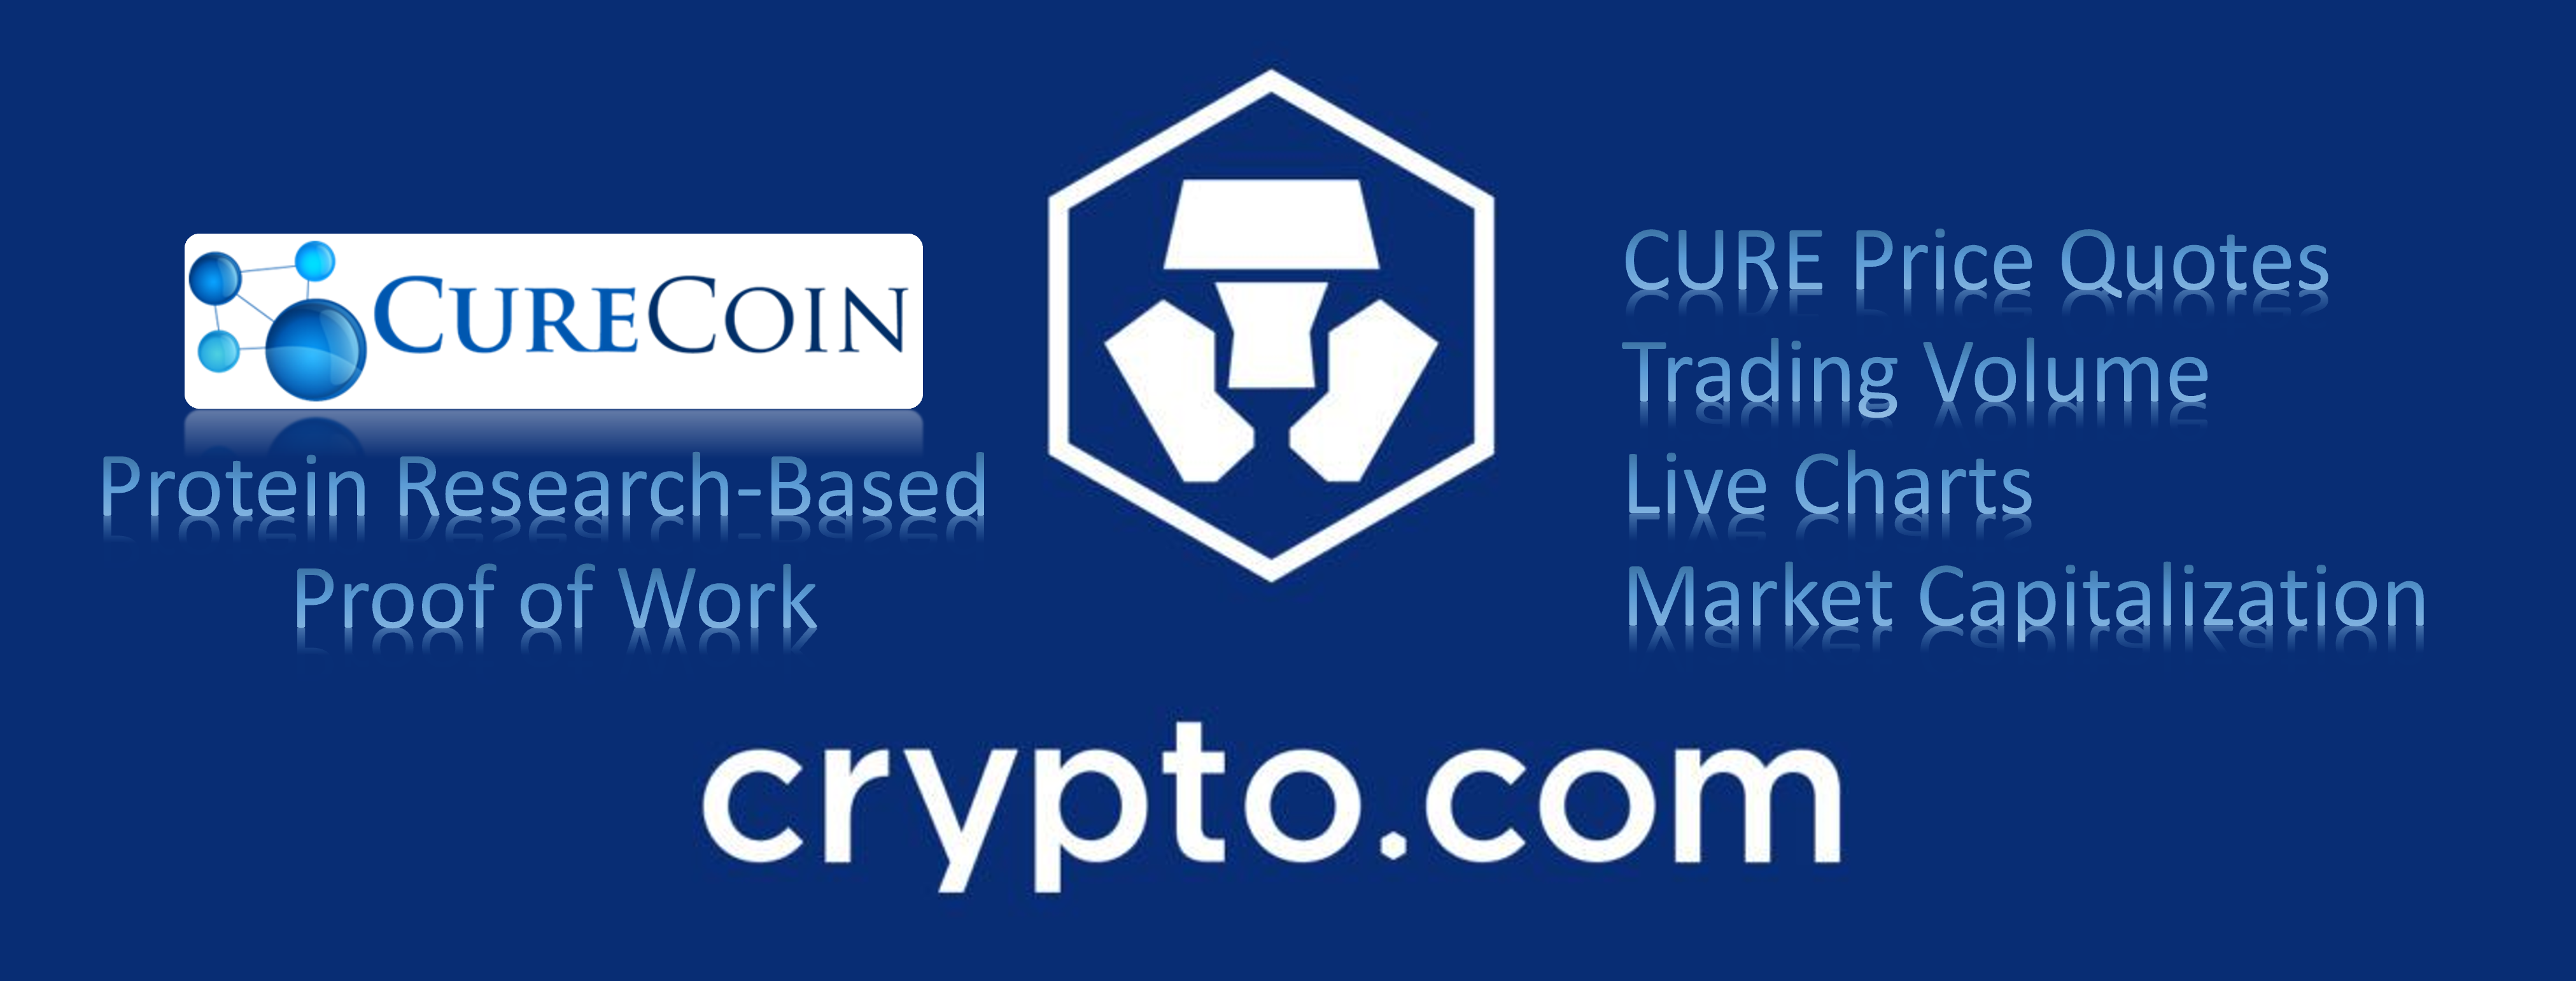 Cryptocom Partnership